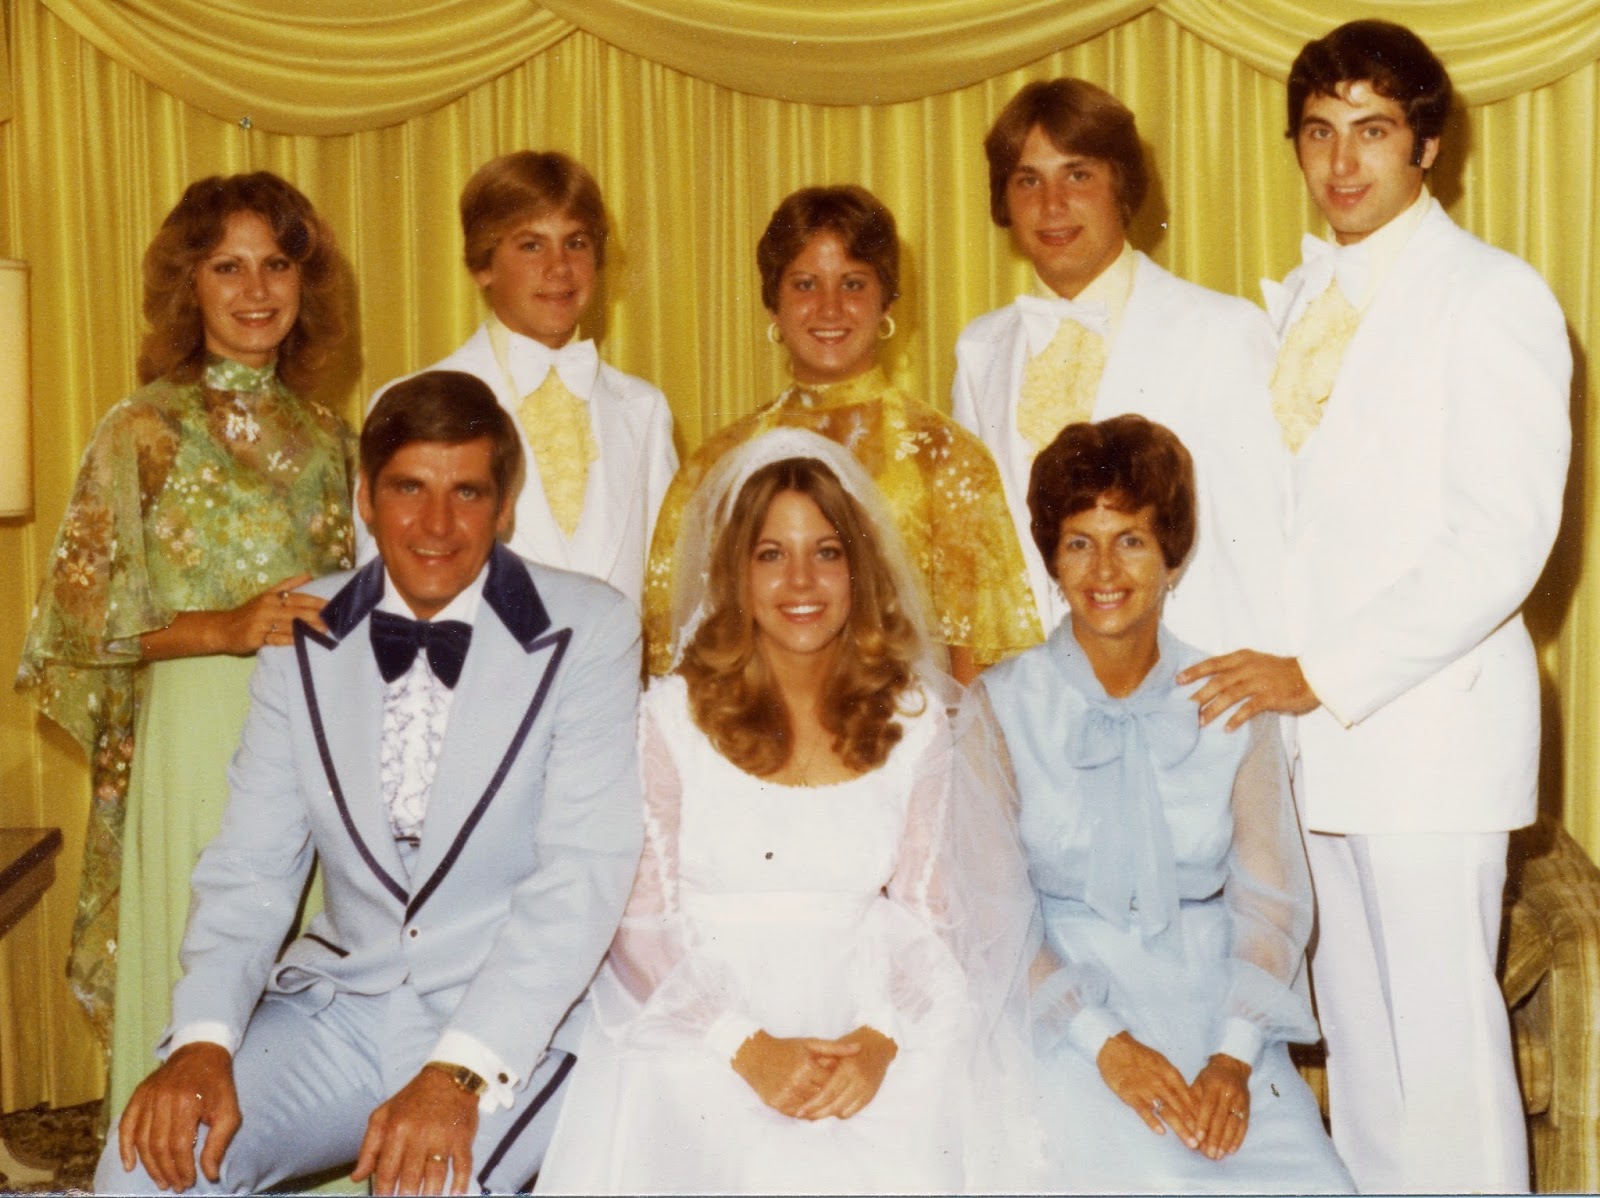 ABT UNK: Wordless Wedding Wednesday: Dietz Family, August 1977